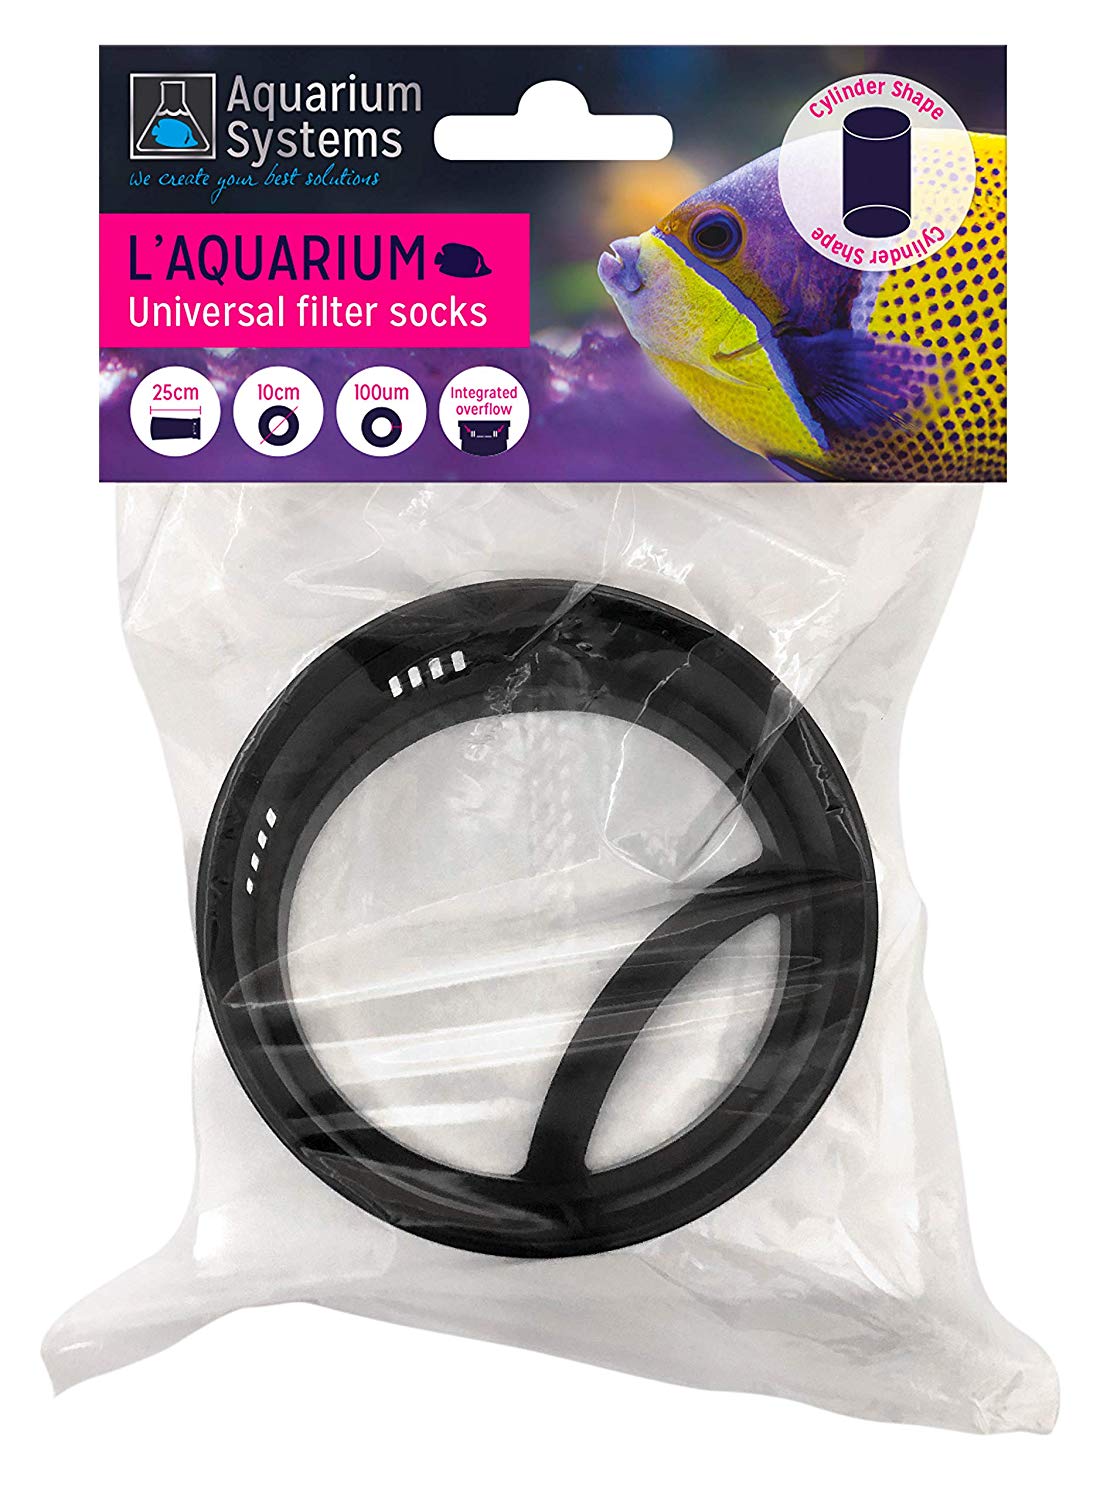 Aquarium Systems Universal Filter Socks Micron bags 3 Sizes